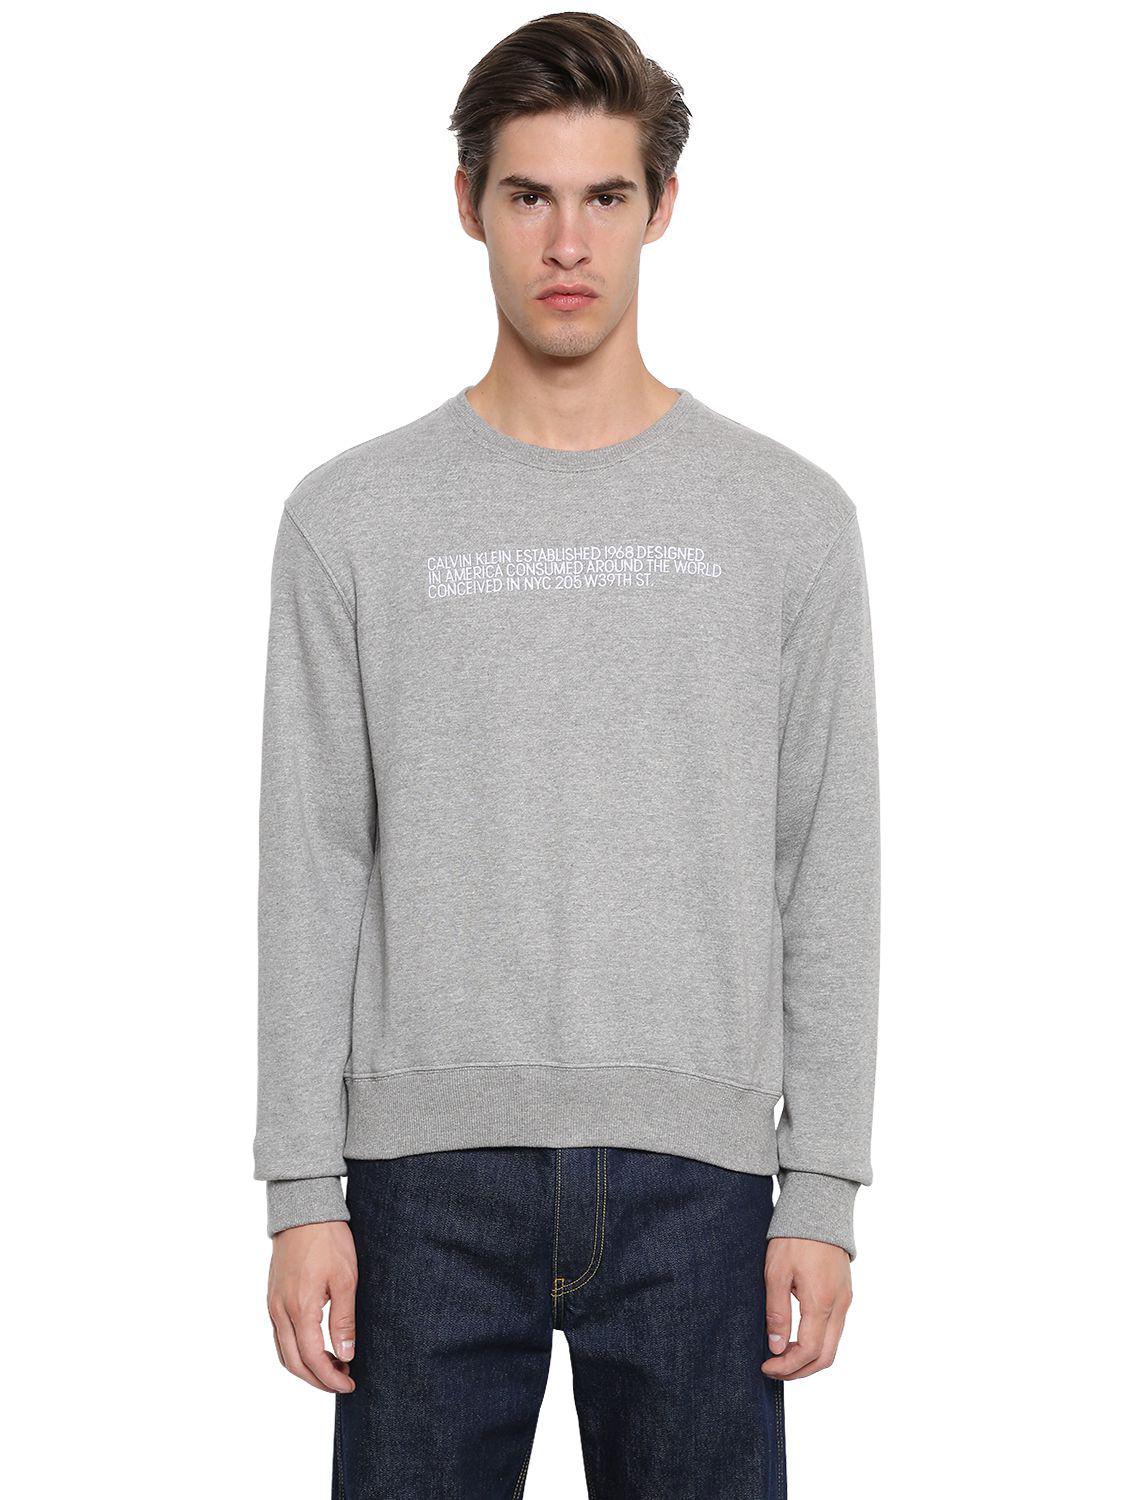 CALVIN KLEIN 205W39NYC Embroidered Cotton Sweatshirt in Grey (Gray) for Men  - Lyst